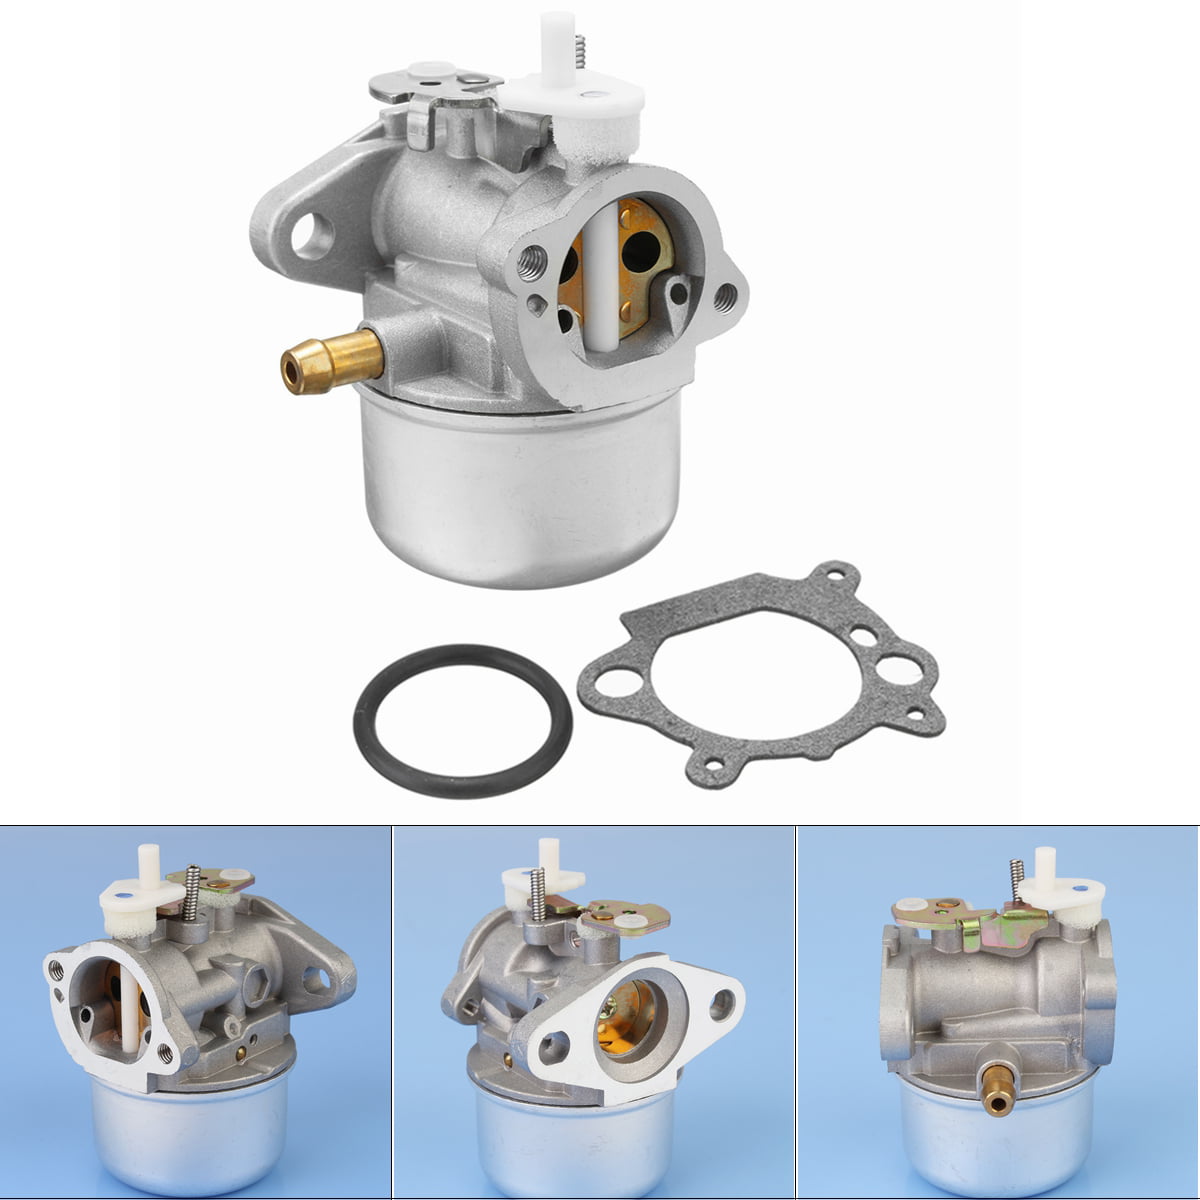 Carburetor Kit for Briggs & Stratton Lawnmower 799869 792253 Pressure washer 